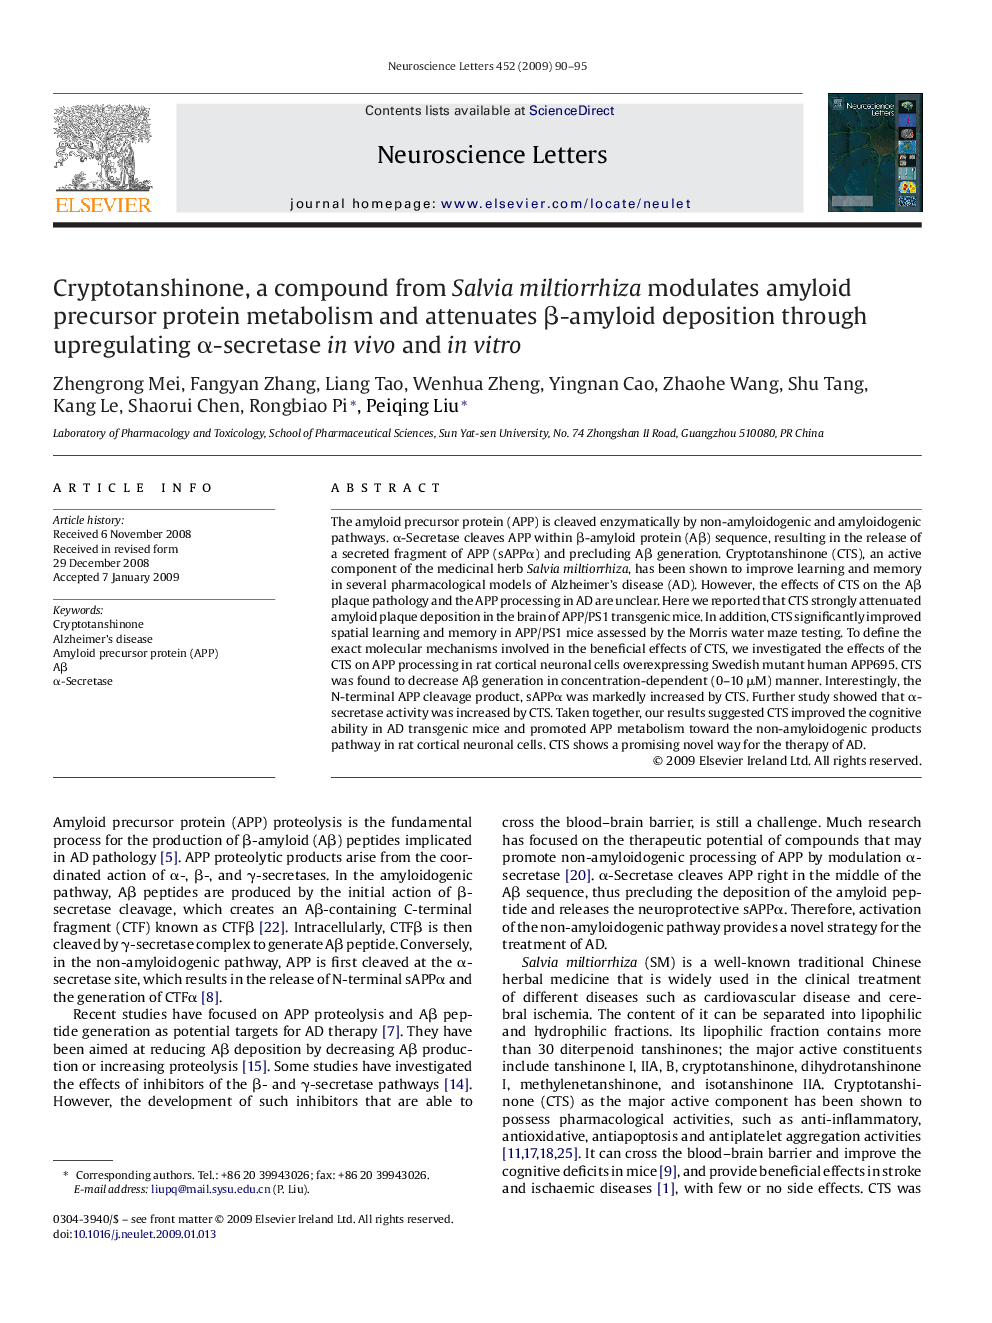 Cryptotanshinone, a compound from Salvia miltiorrhiza modulates amyloid precursor protein metabolism and attenuates Î²-amyloid deposition through upregulating Î±-secretase in vivo and in vitro